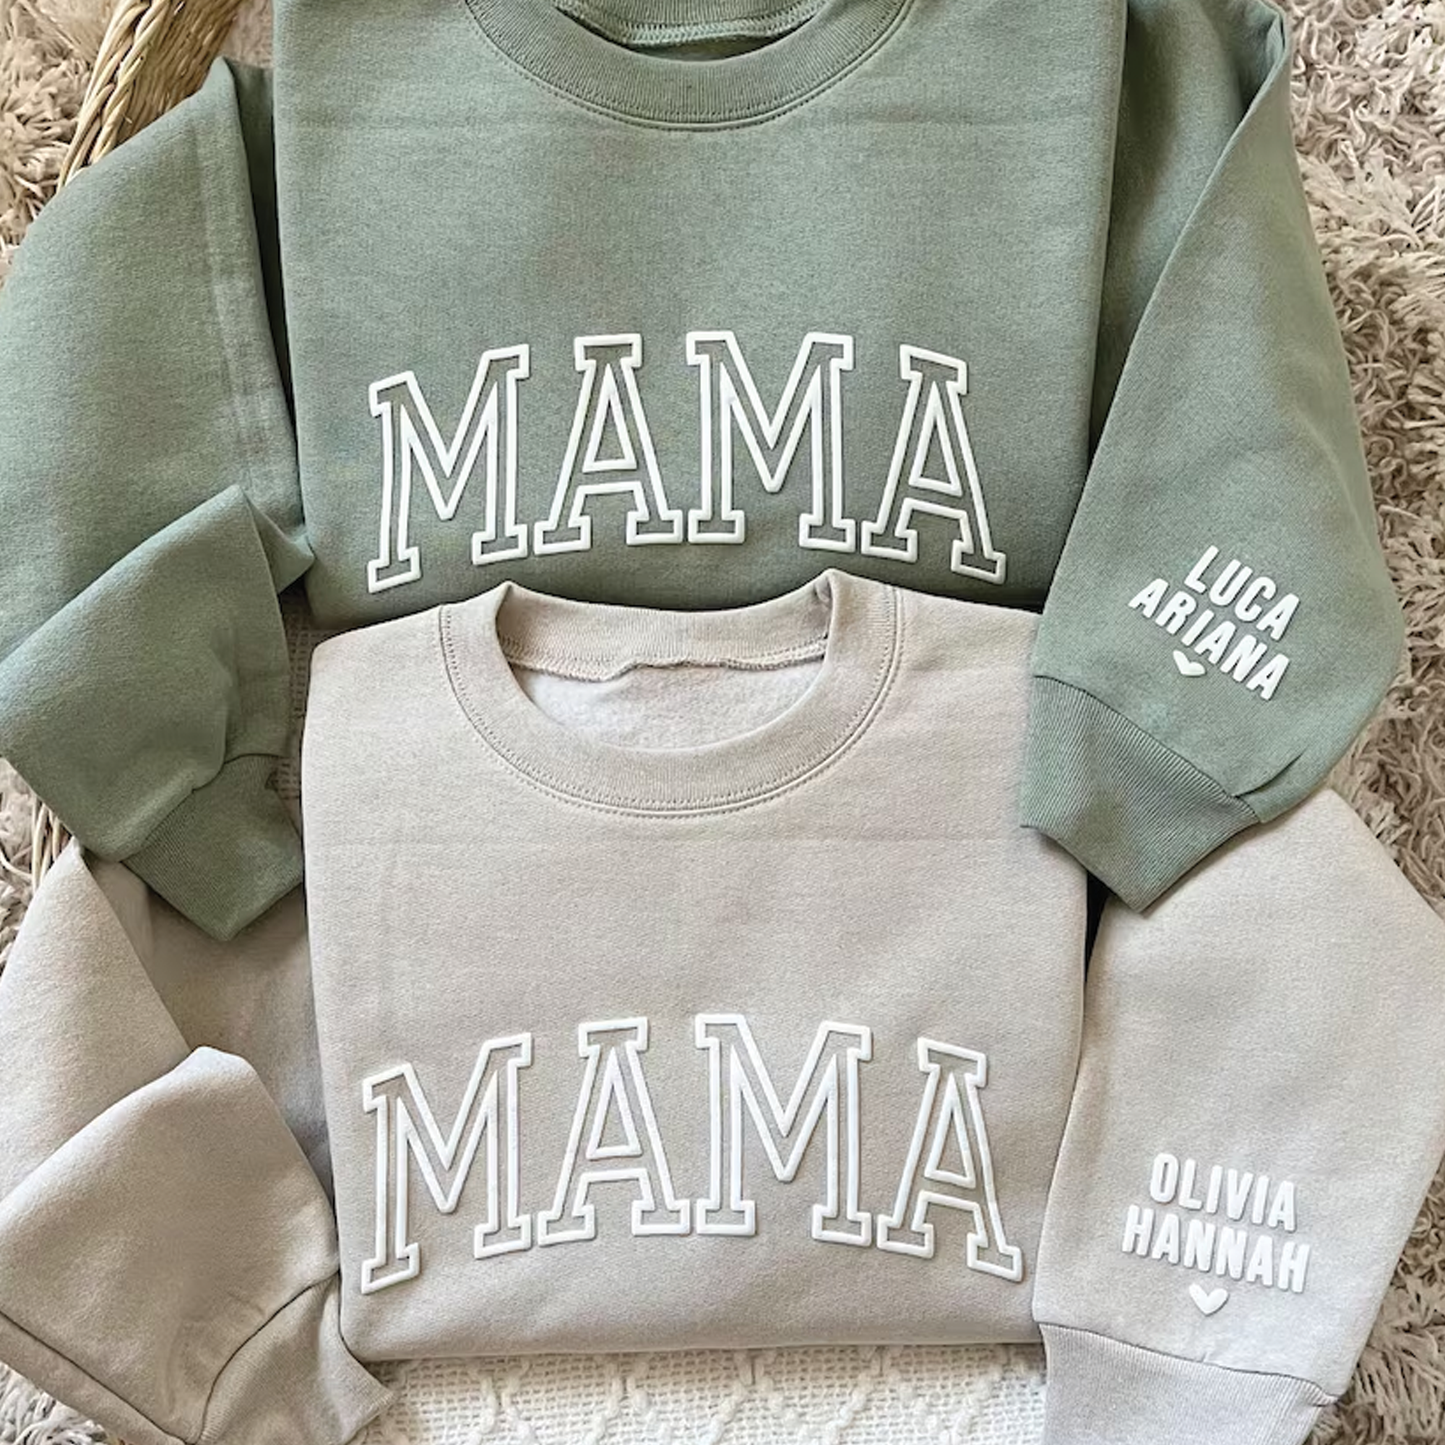 Personalised Puff Print Mama sweater with kids name(s) on sleeve Sweatshirt